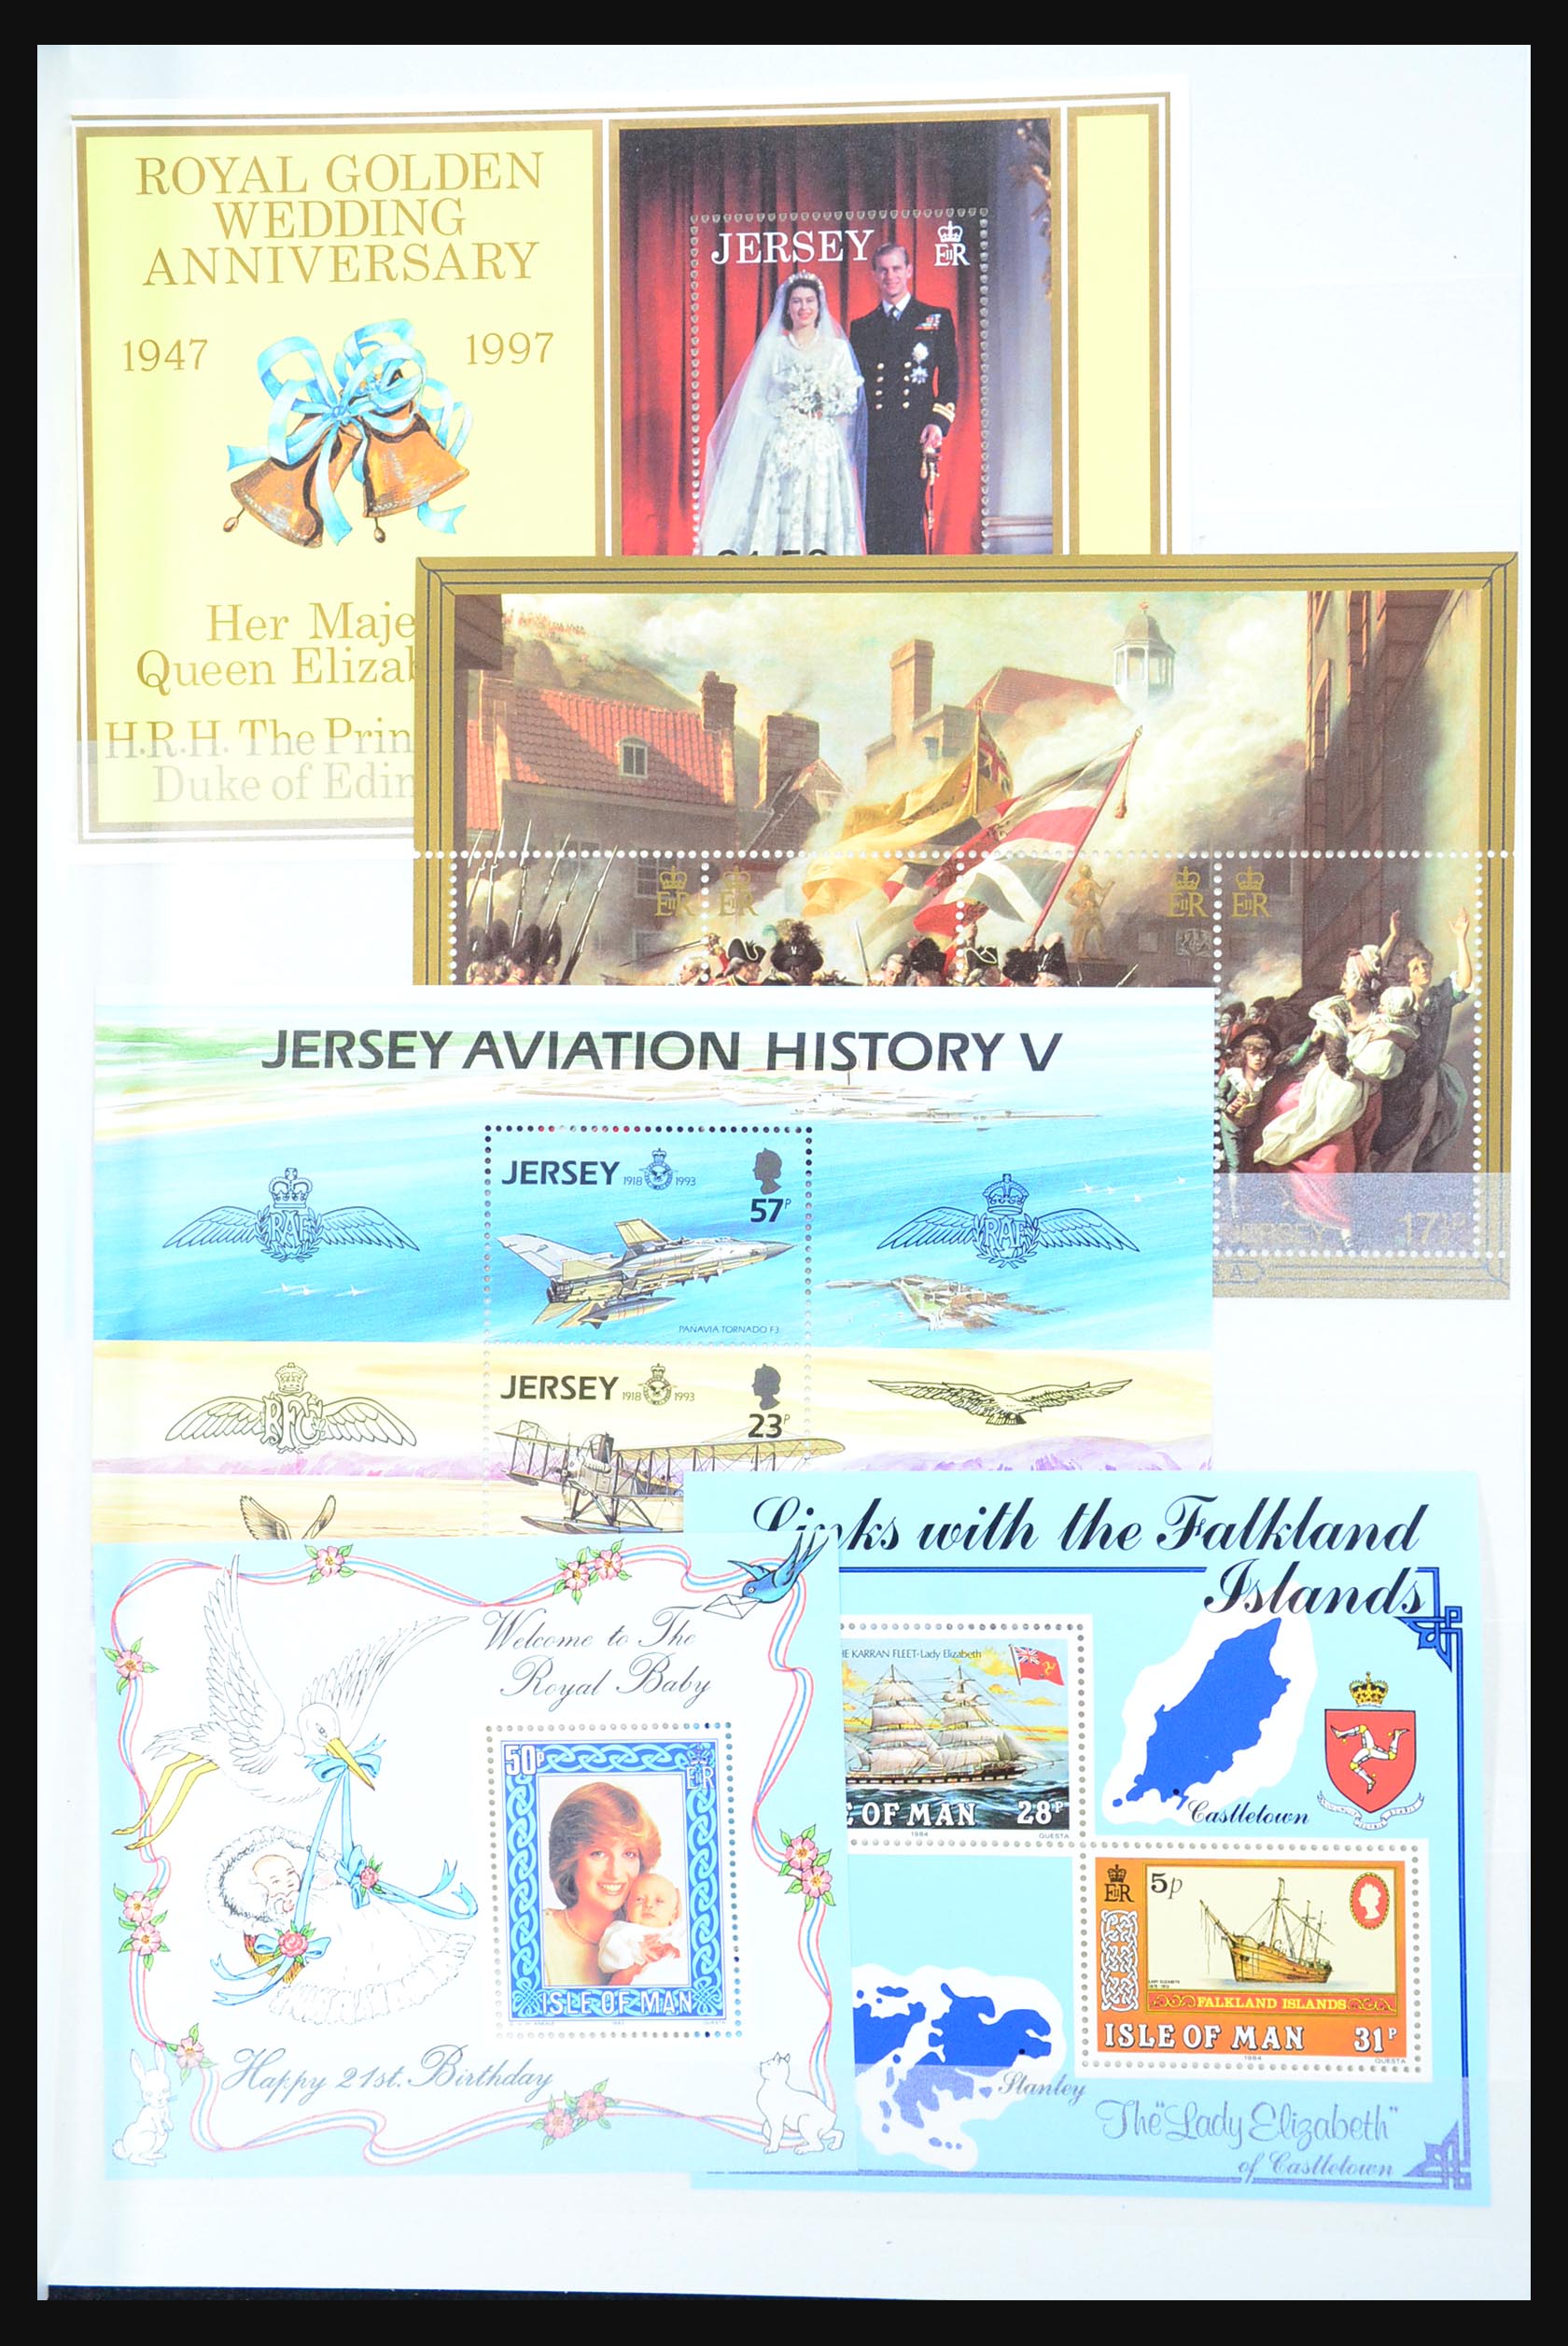 31249 043 - 31249 Channel Islands souvenir sheets and sheetlets 1978-1997.